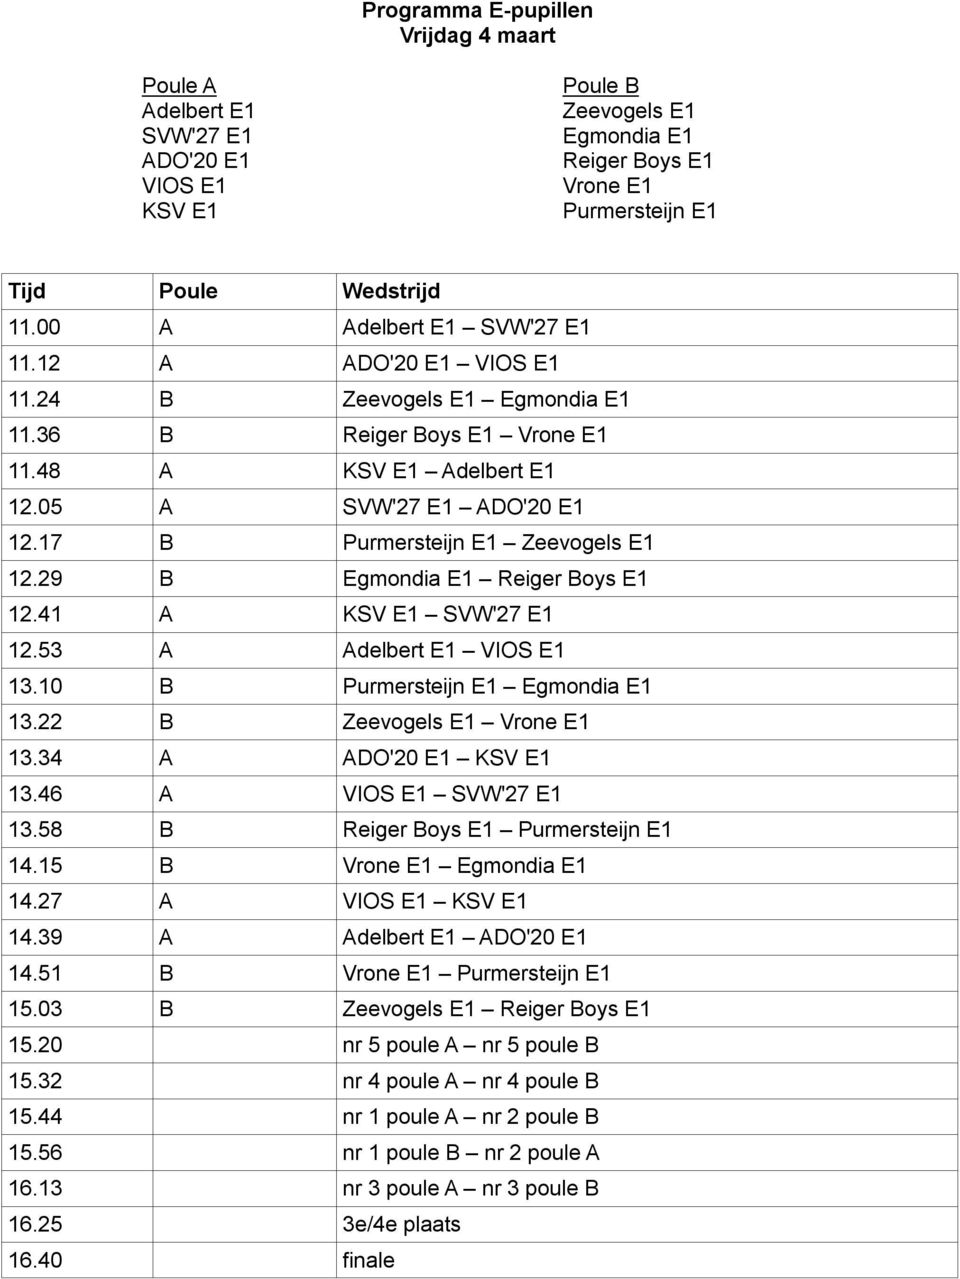 17 B Purmersteijn E1 Zeevogels E1 12.29 B Egmondia E1 Reiger Boys E1 12.41 A KSV E1 SVW'27 E1 12.53 A Adelbert E1 VIOS E1 13.10 B Purmersteijn E1 Egmondia E1 13.22 B Zeevogels E1 Vrone E1 13.